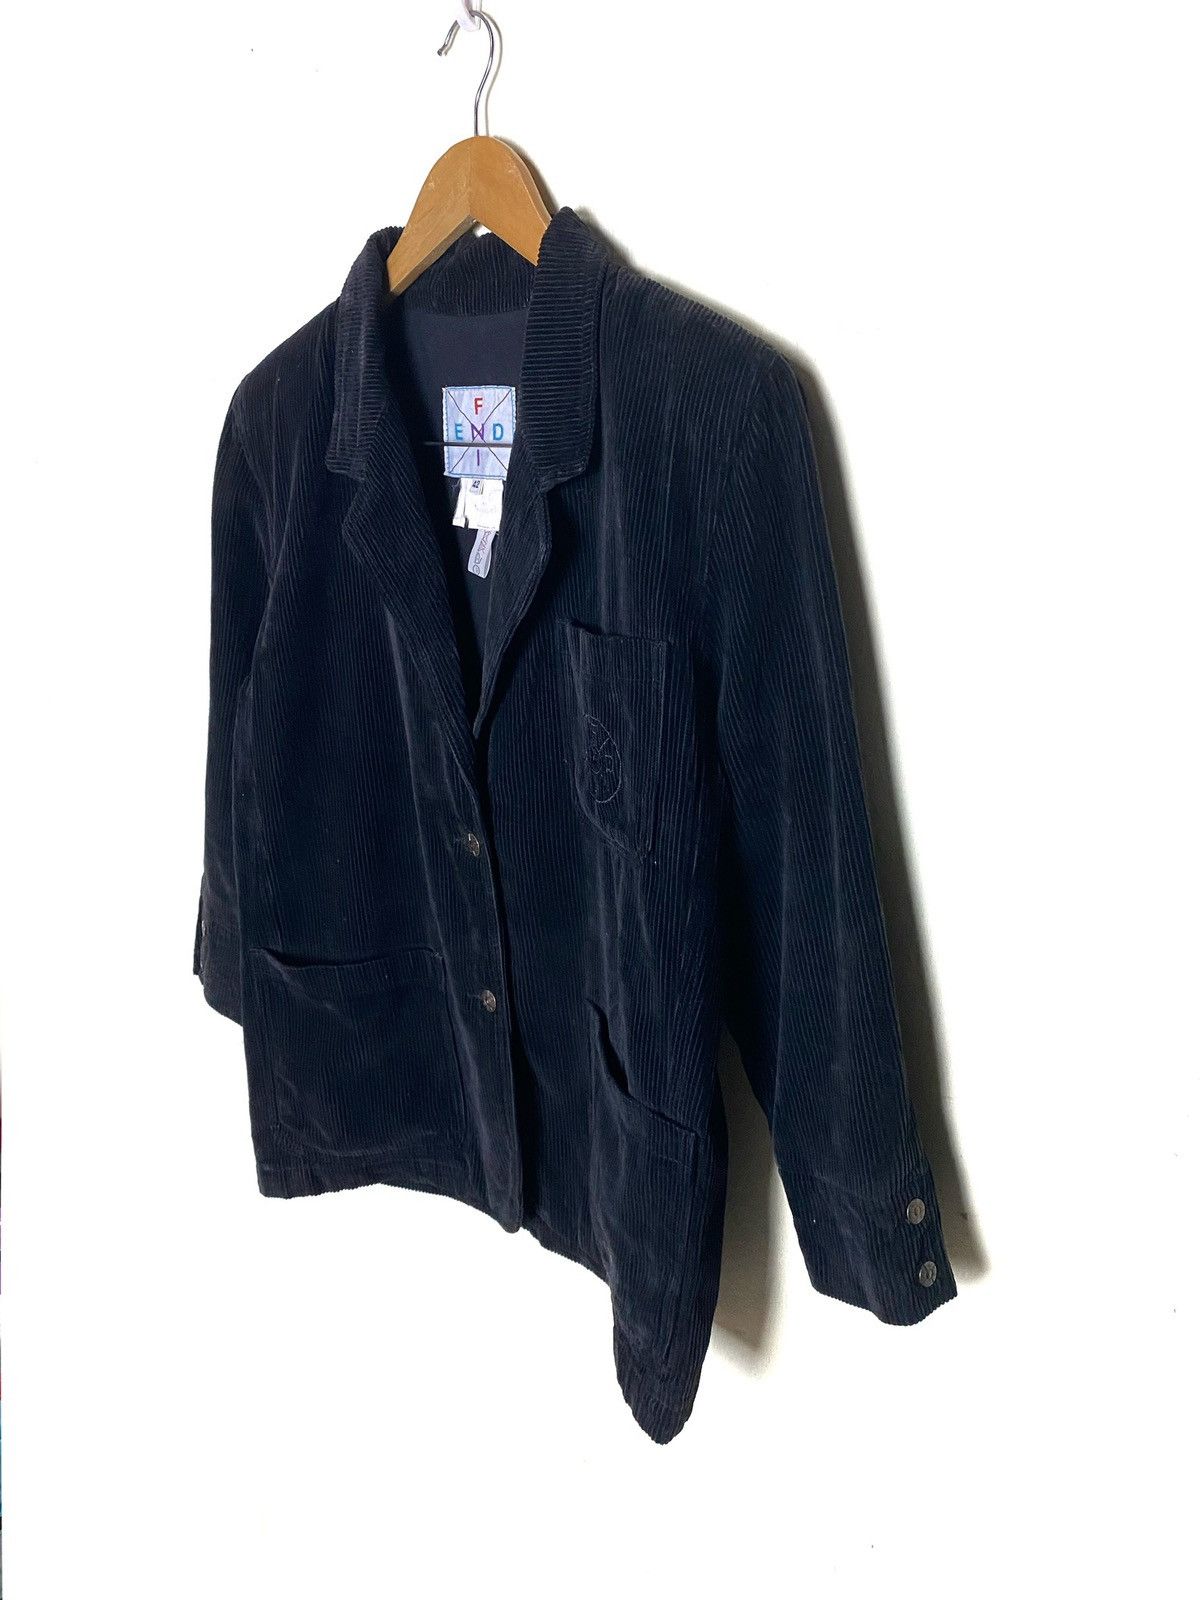 Vintage FENDI Corduroy Jacket Blazer - 5